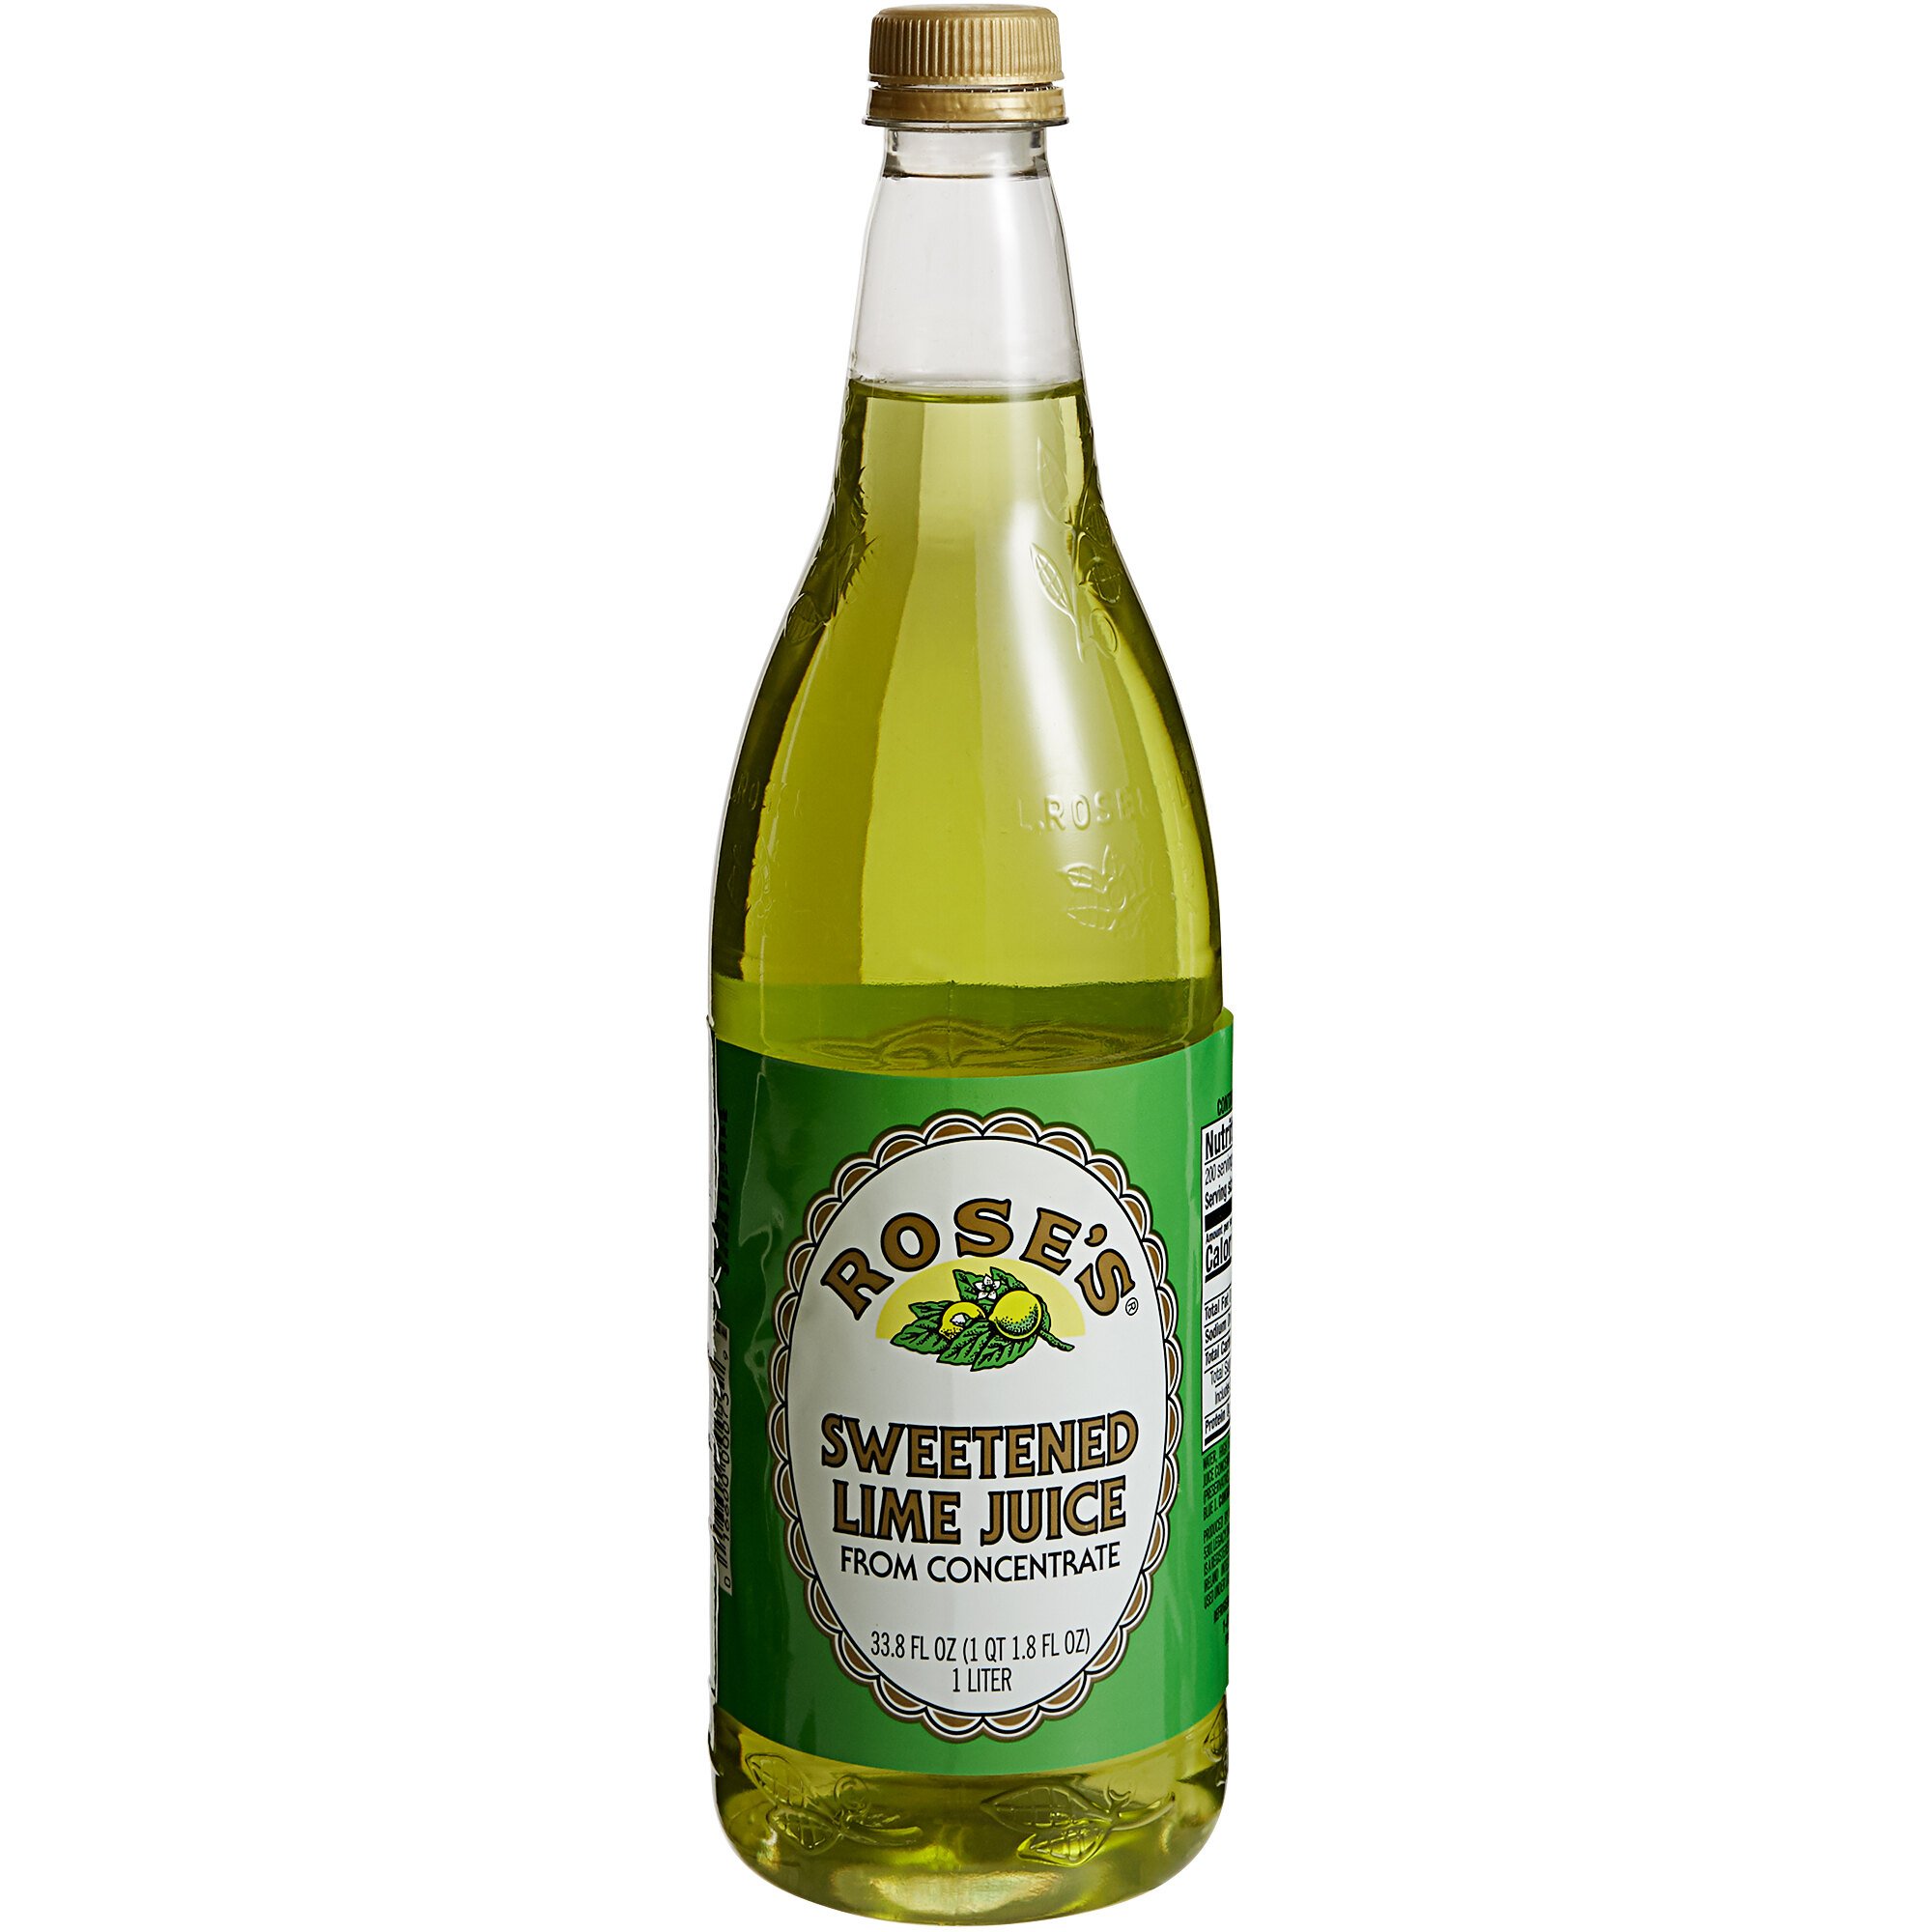 httpsroses lime juice 12 1 liter bottles case